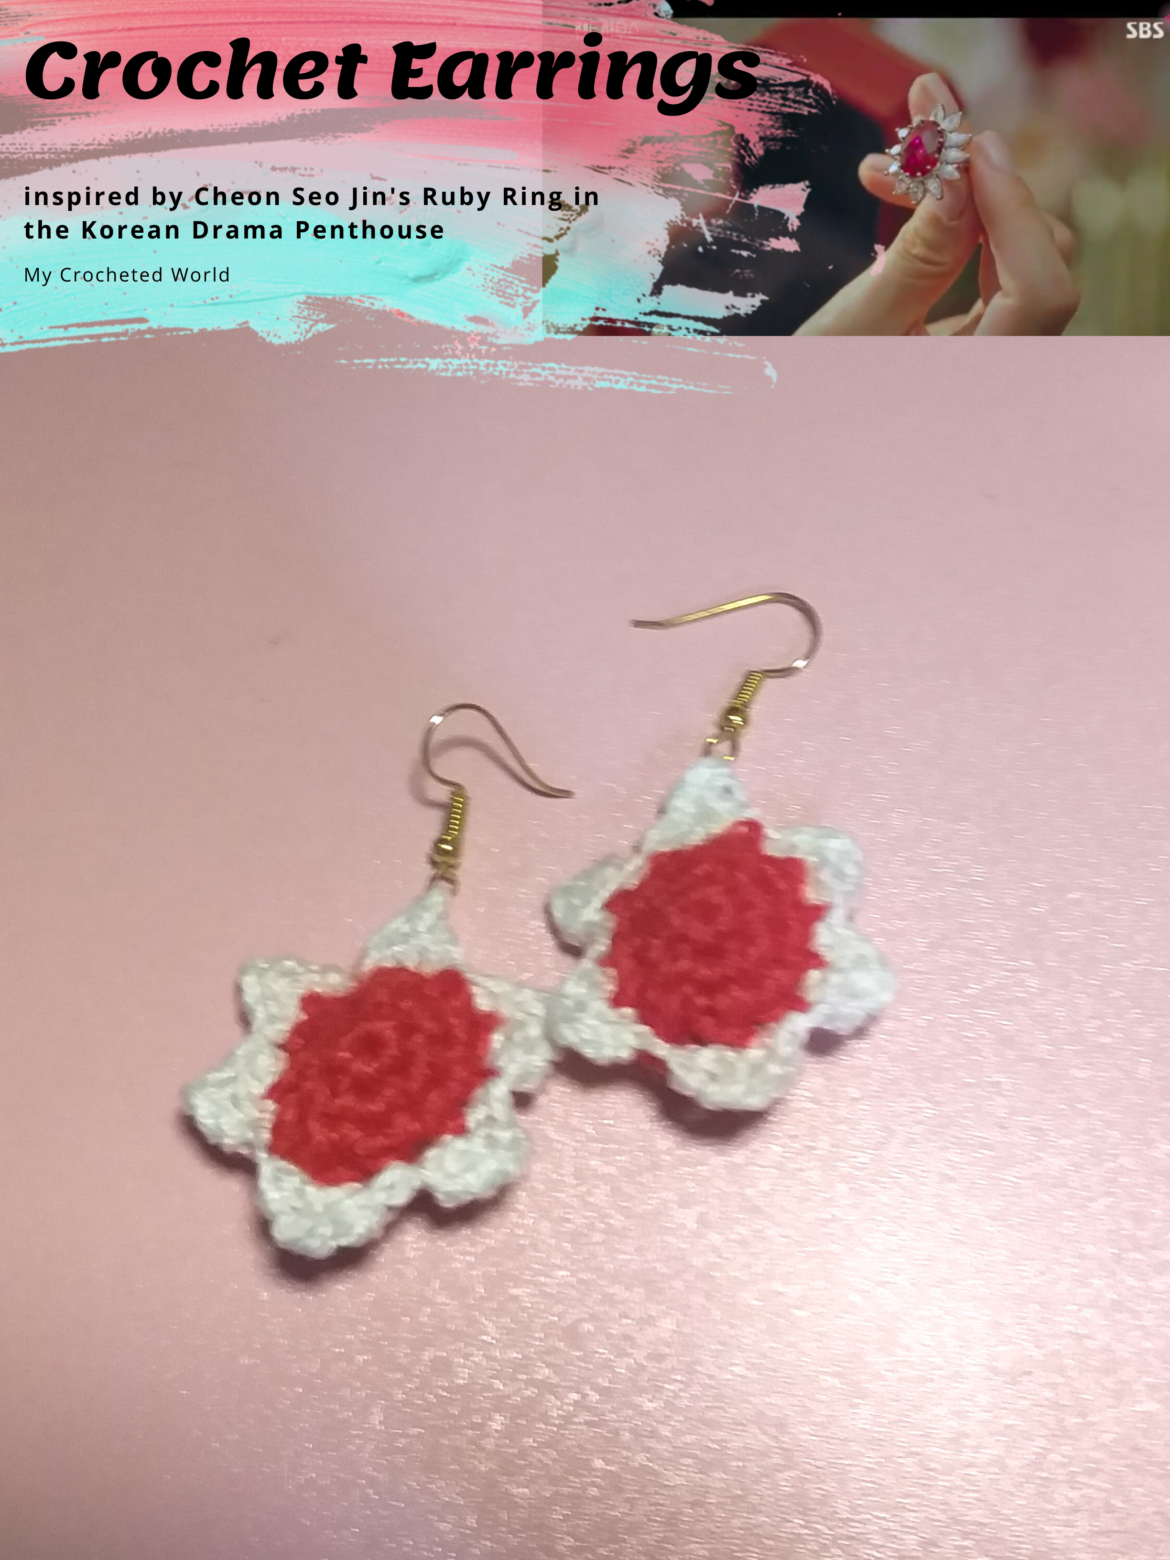 Crochet Earrings – inspired by Korean Drama Penthouse